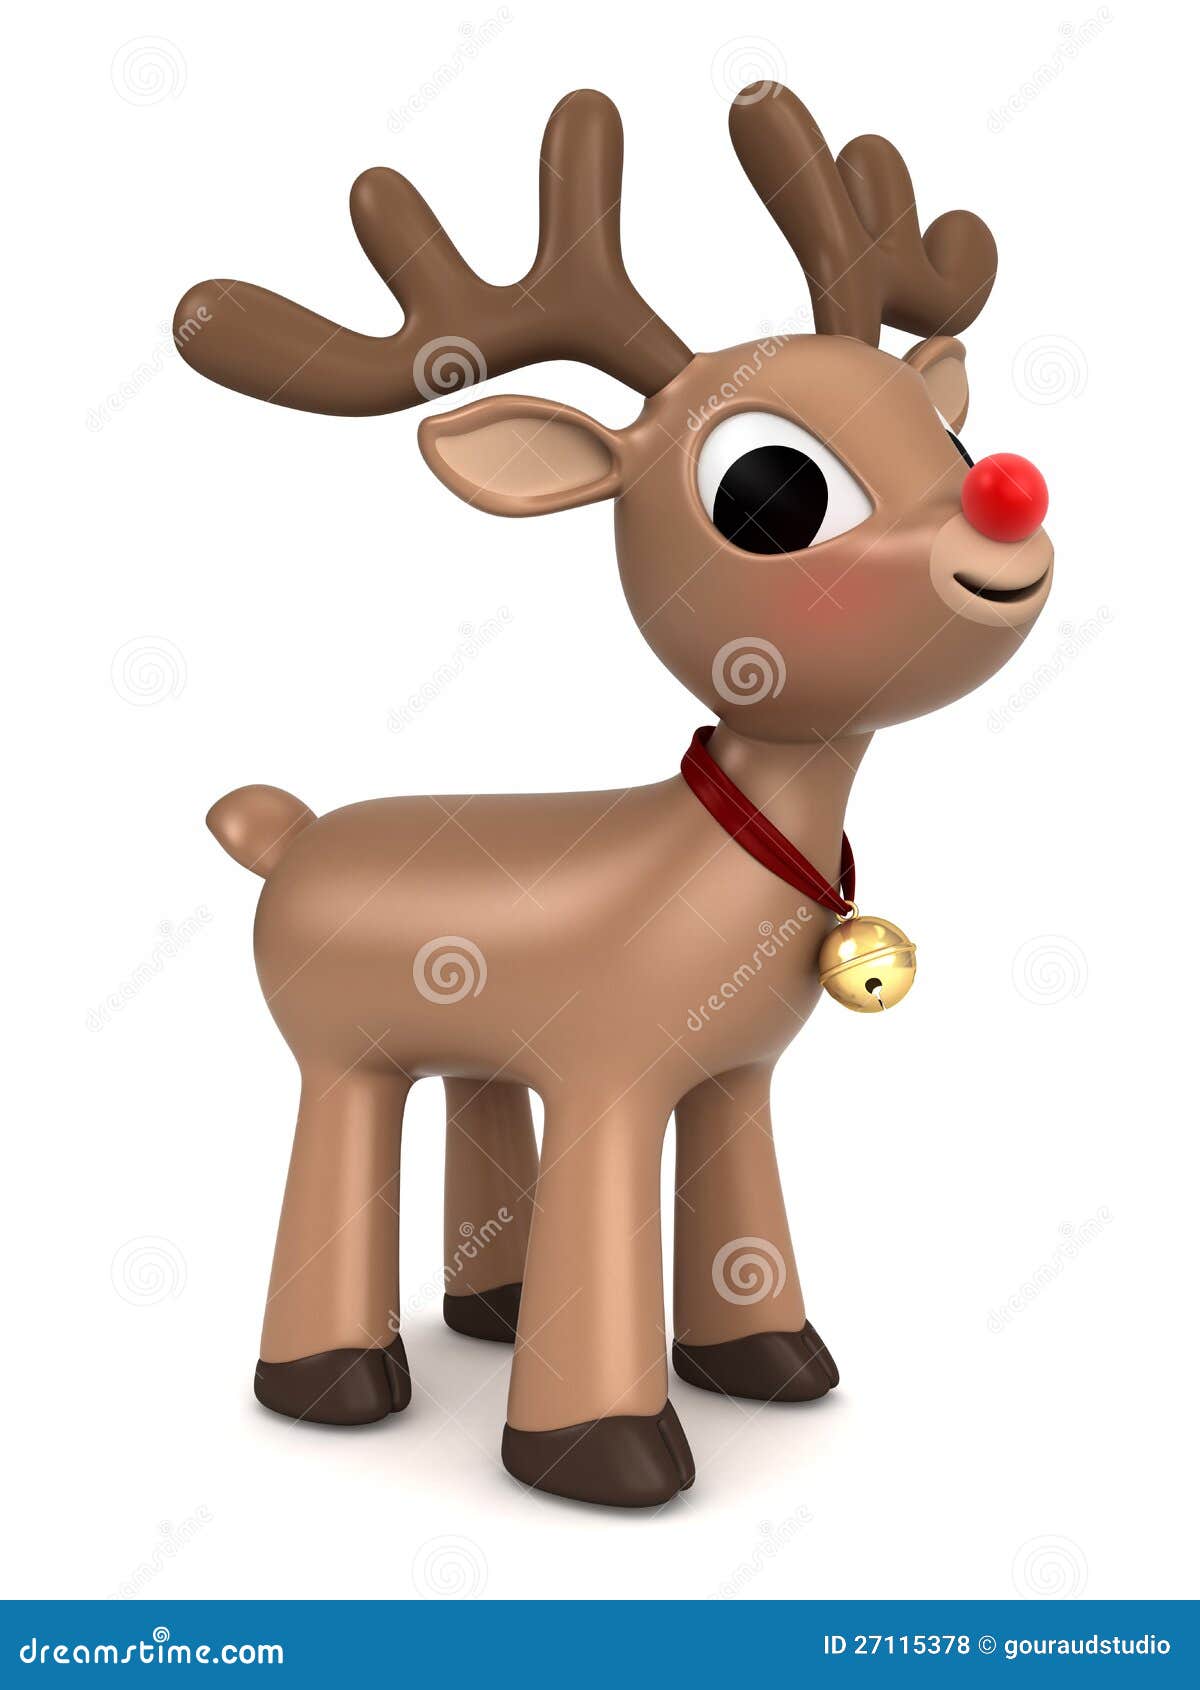 Christmas Reindeer Royalty Free Stock Photos - Image: 27115378